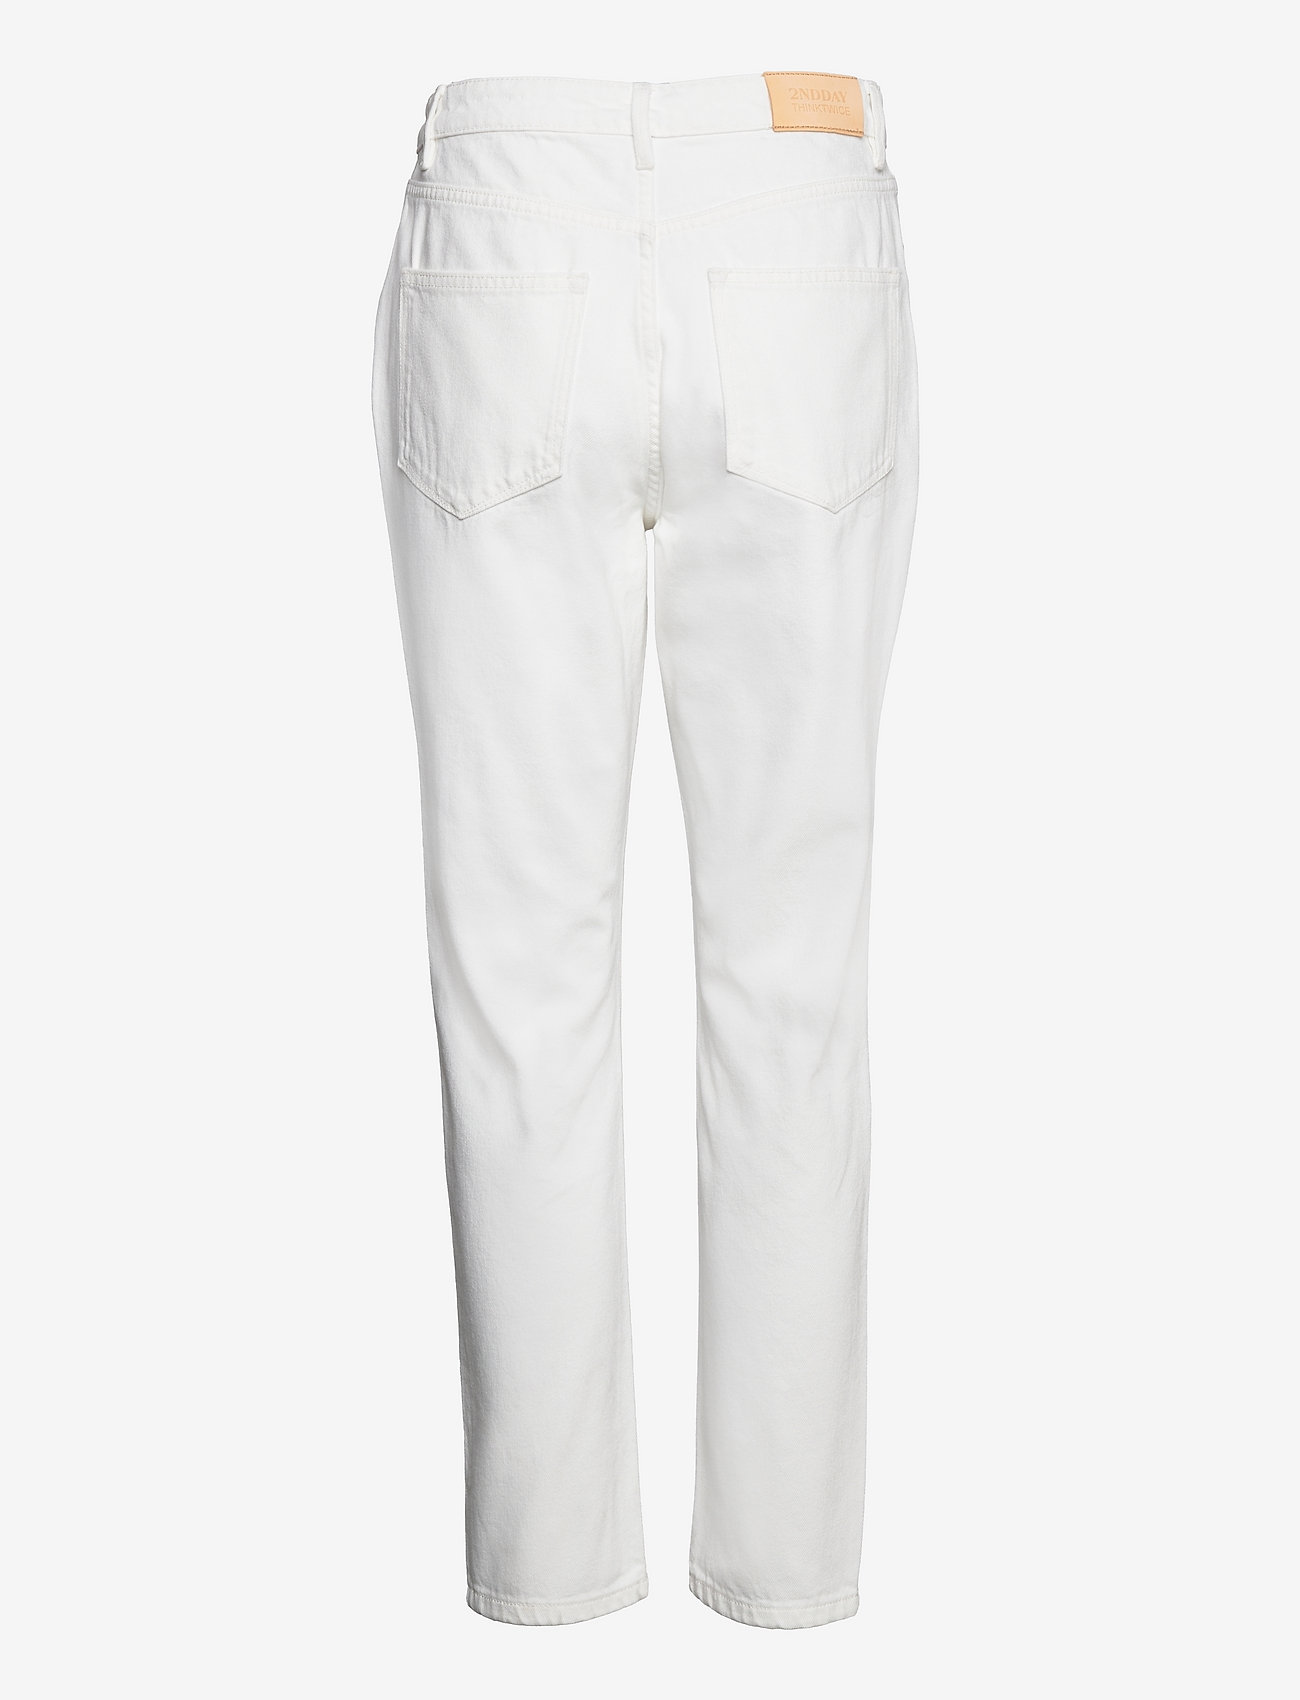 2NDDAY - 2ND Raylee TT - White Denim - slim jeans - white denim - 1